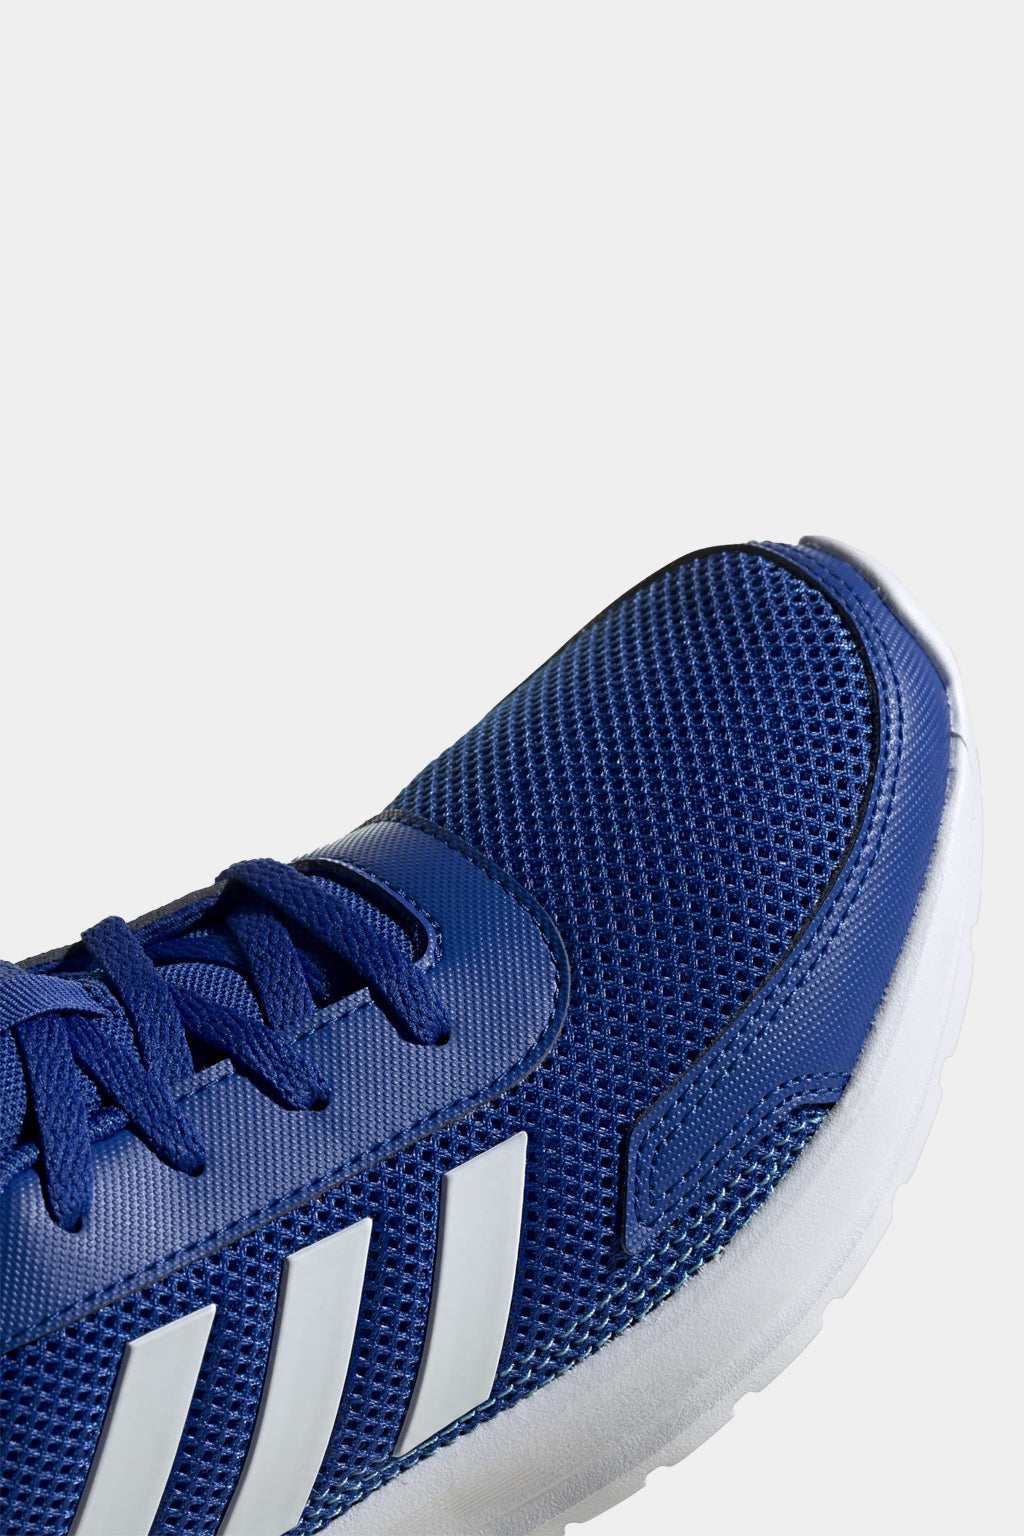 Adidas - Tensaur Shoes